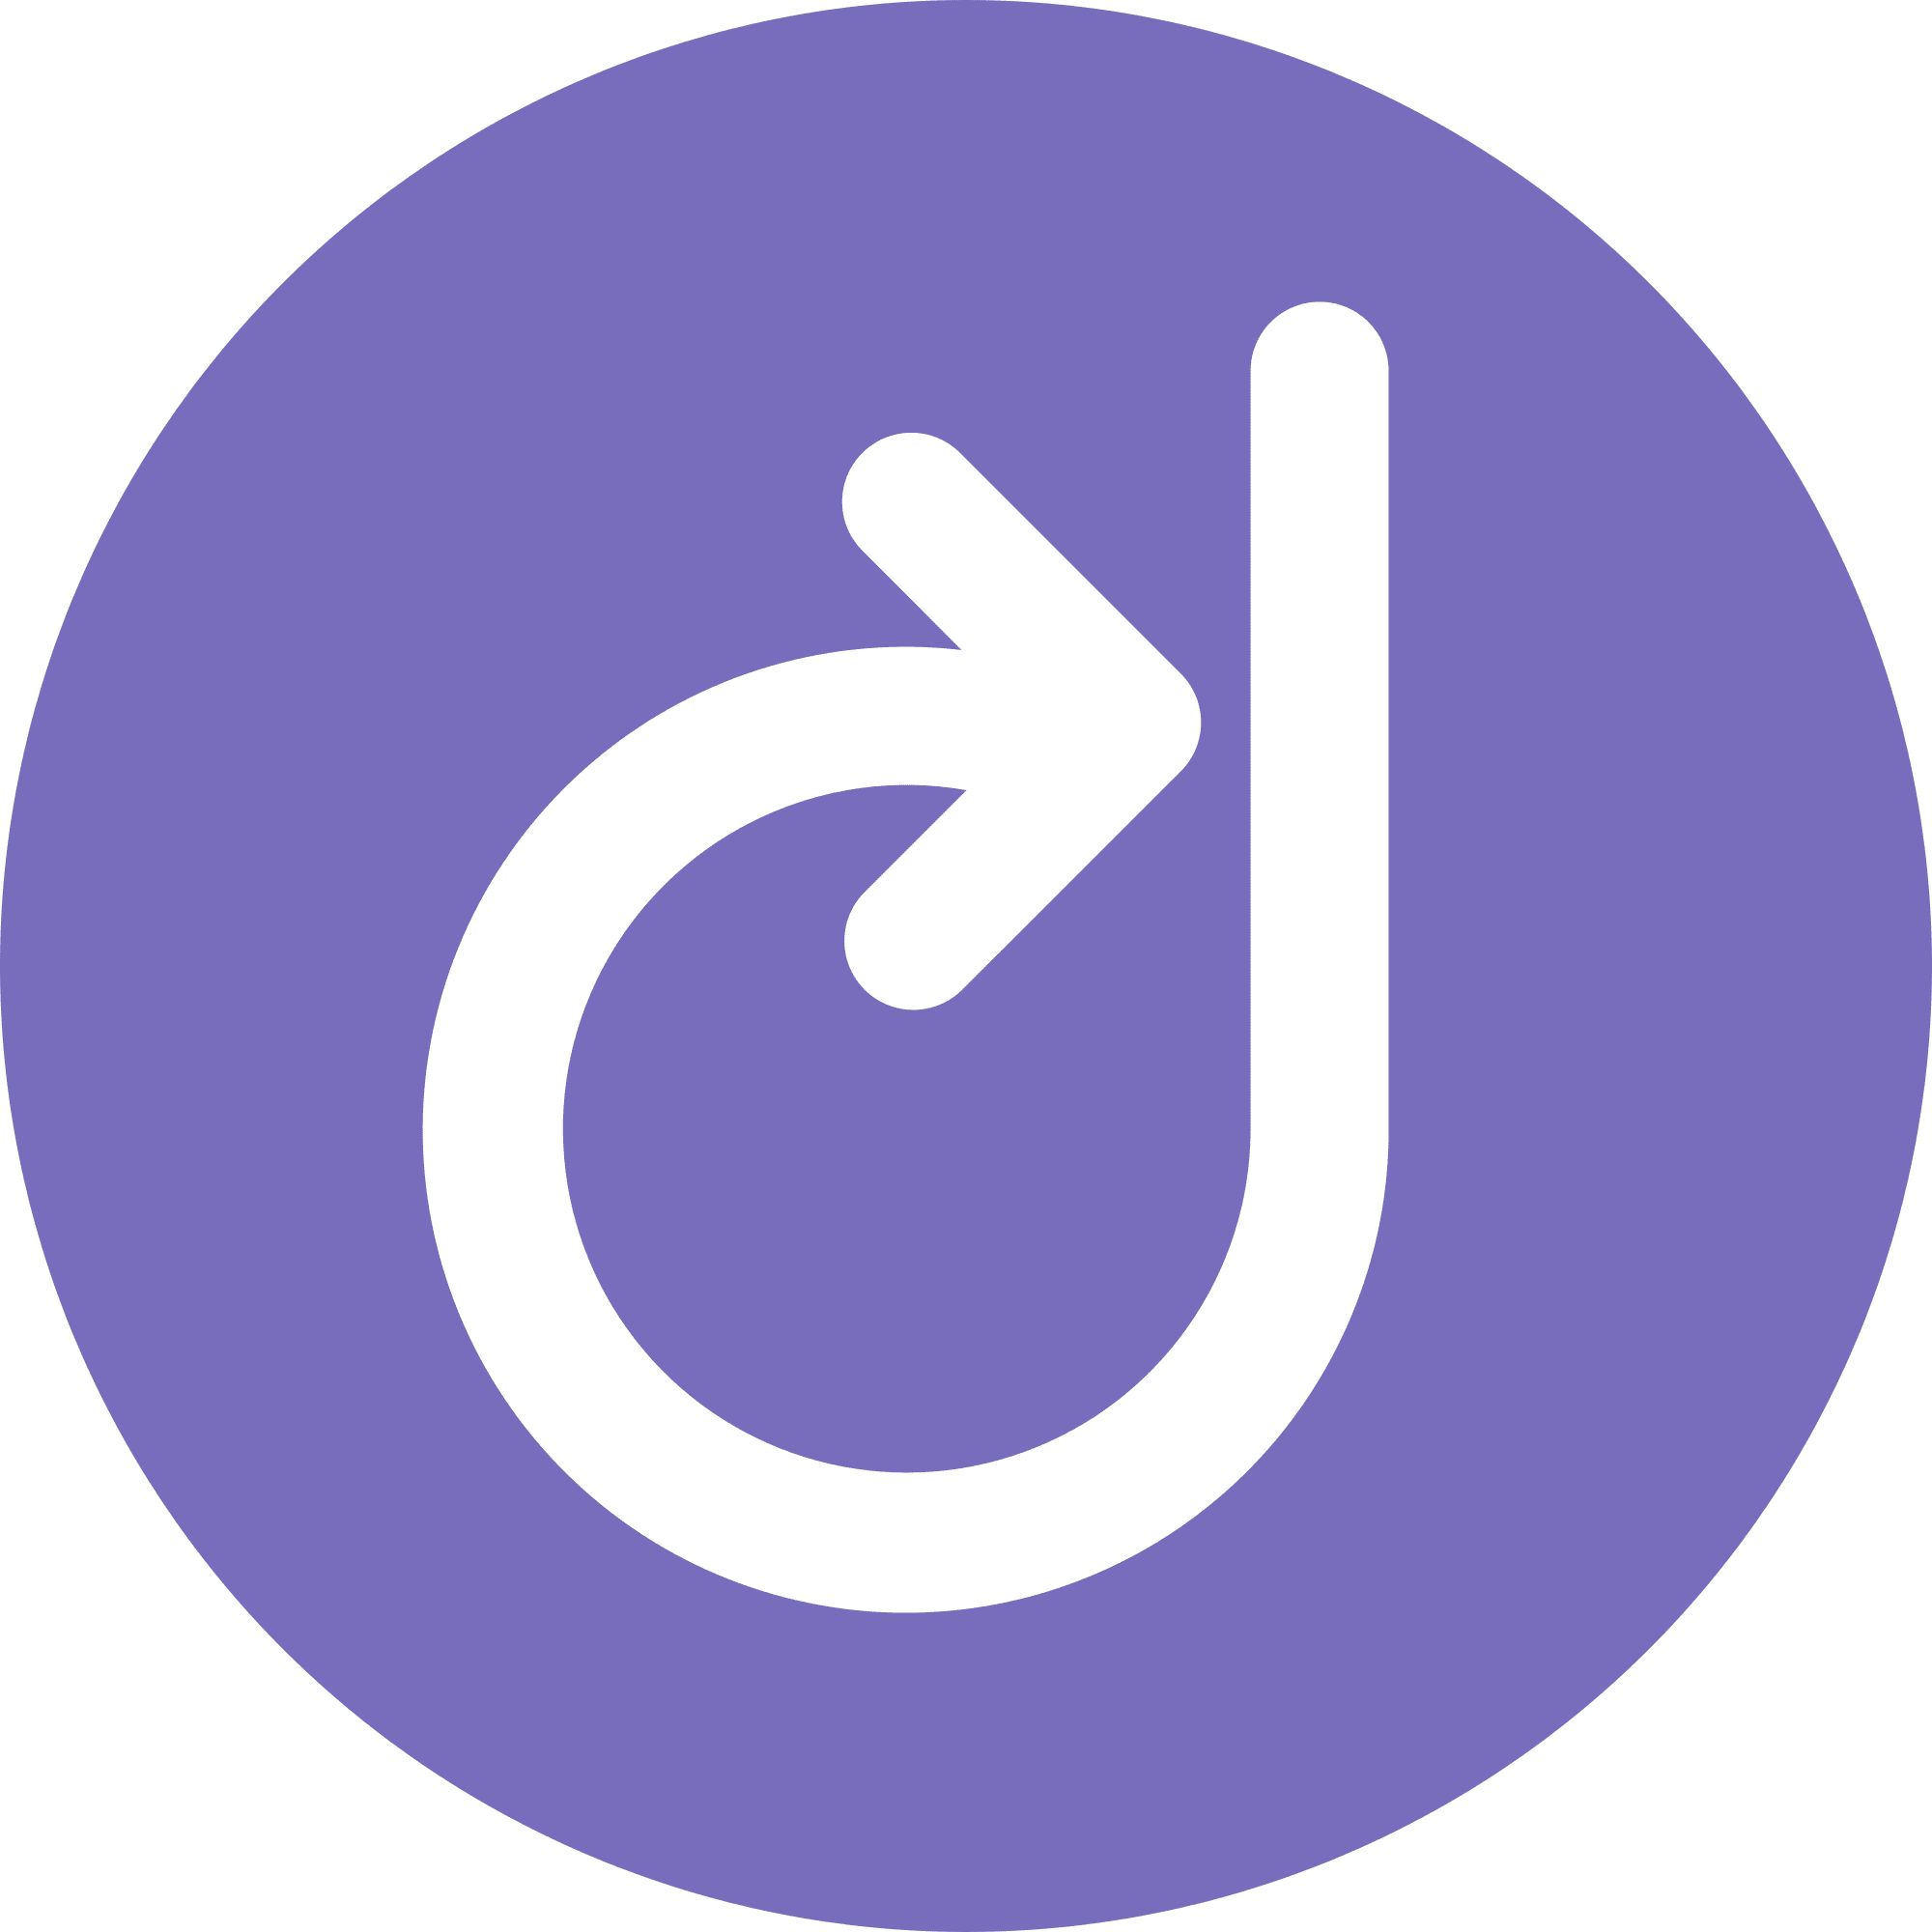 Dock logo in png format